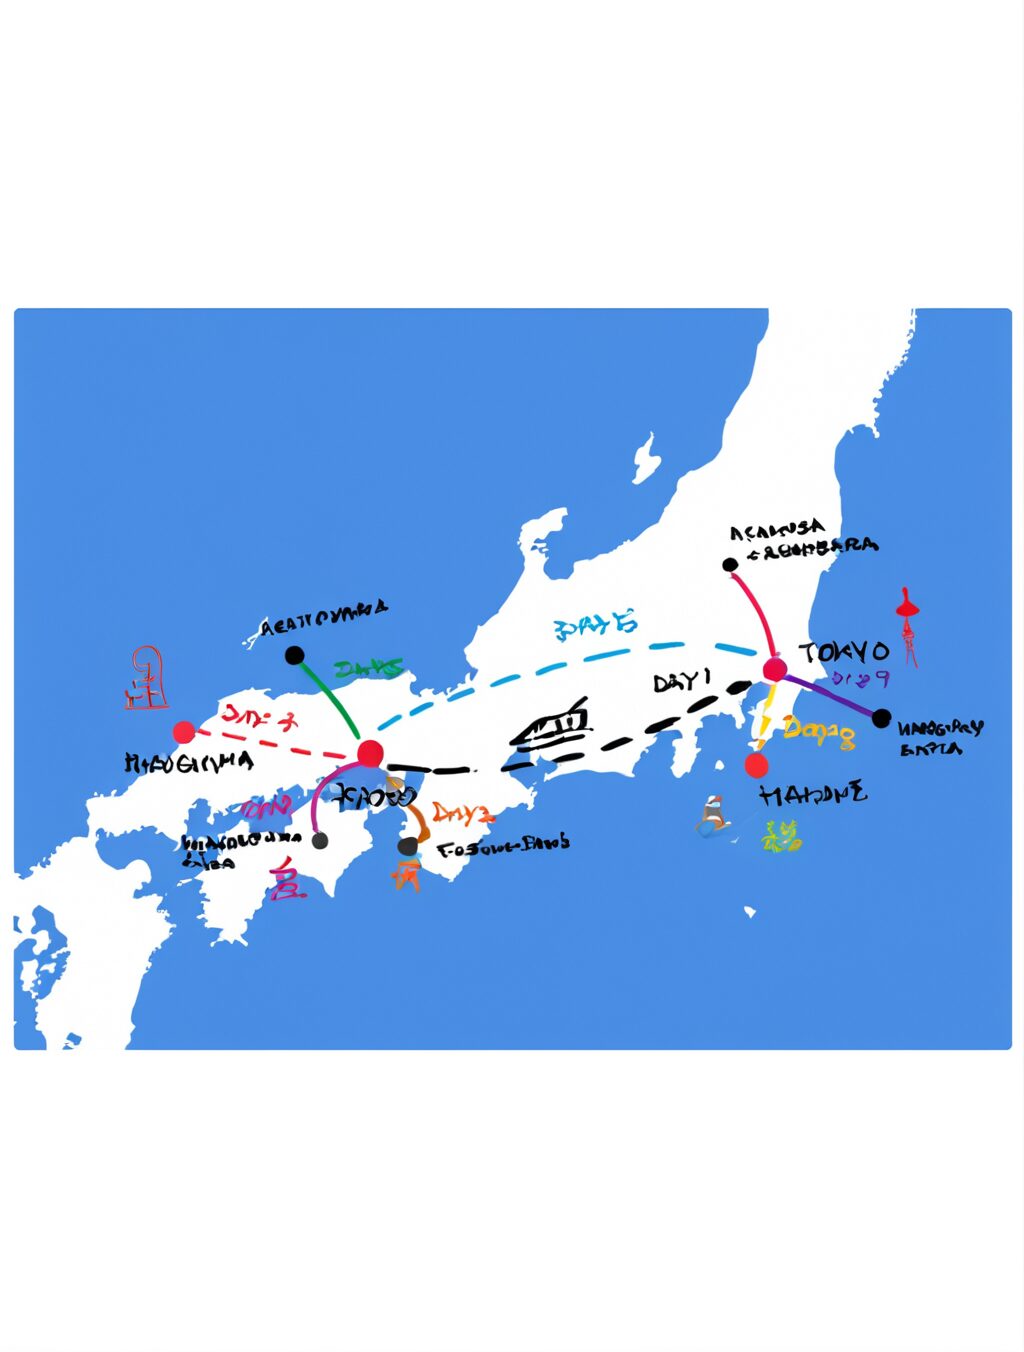 japan winter itinerary